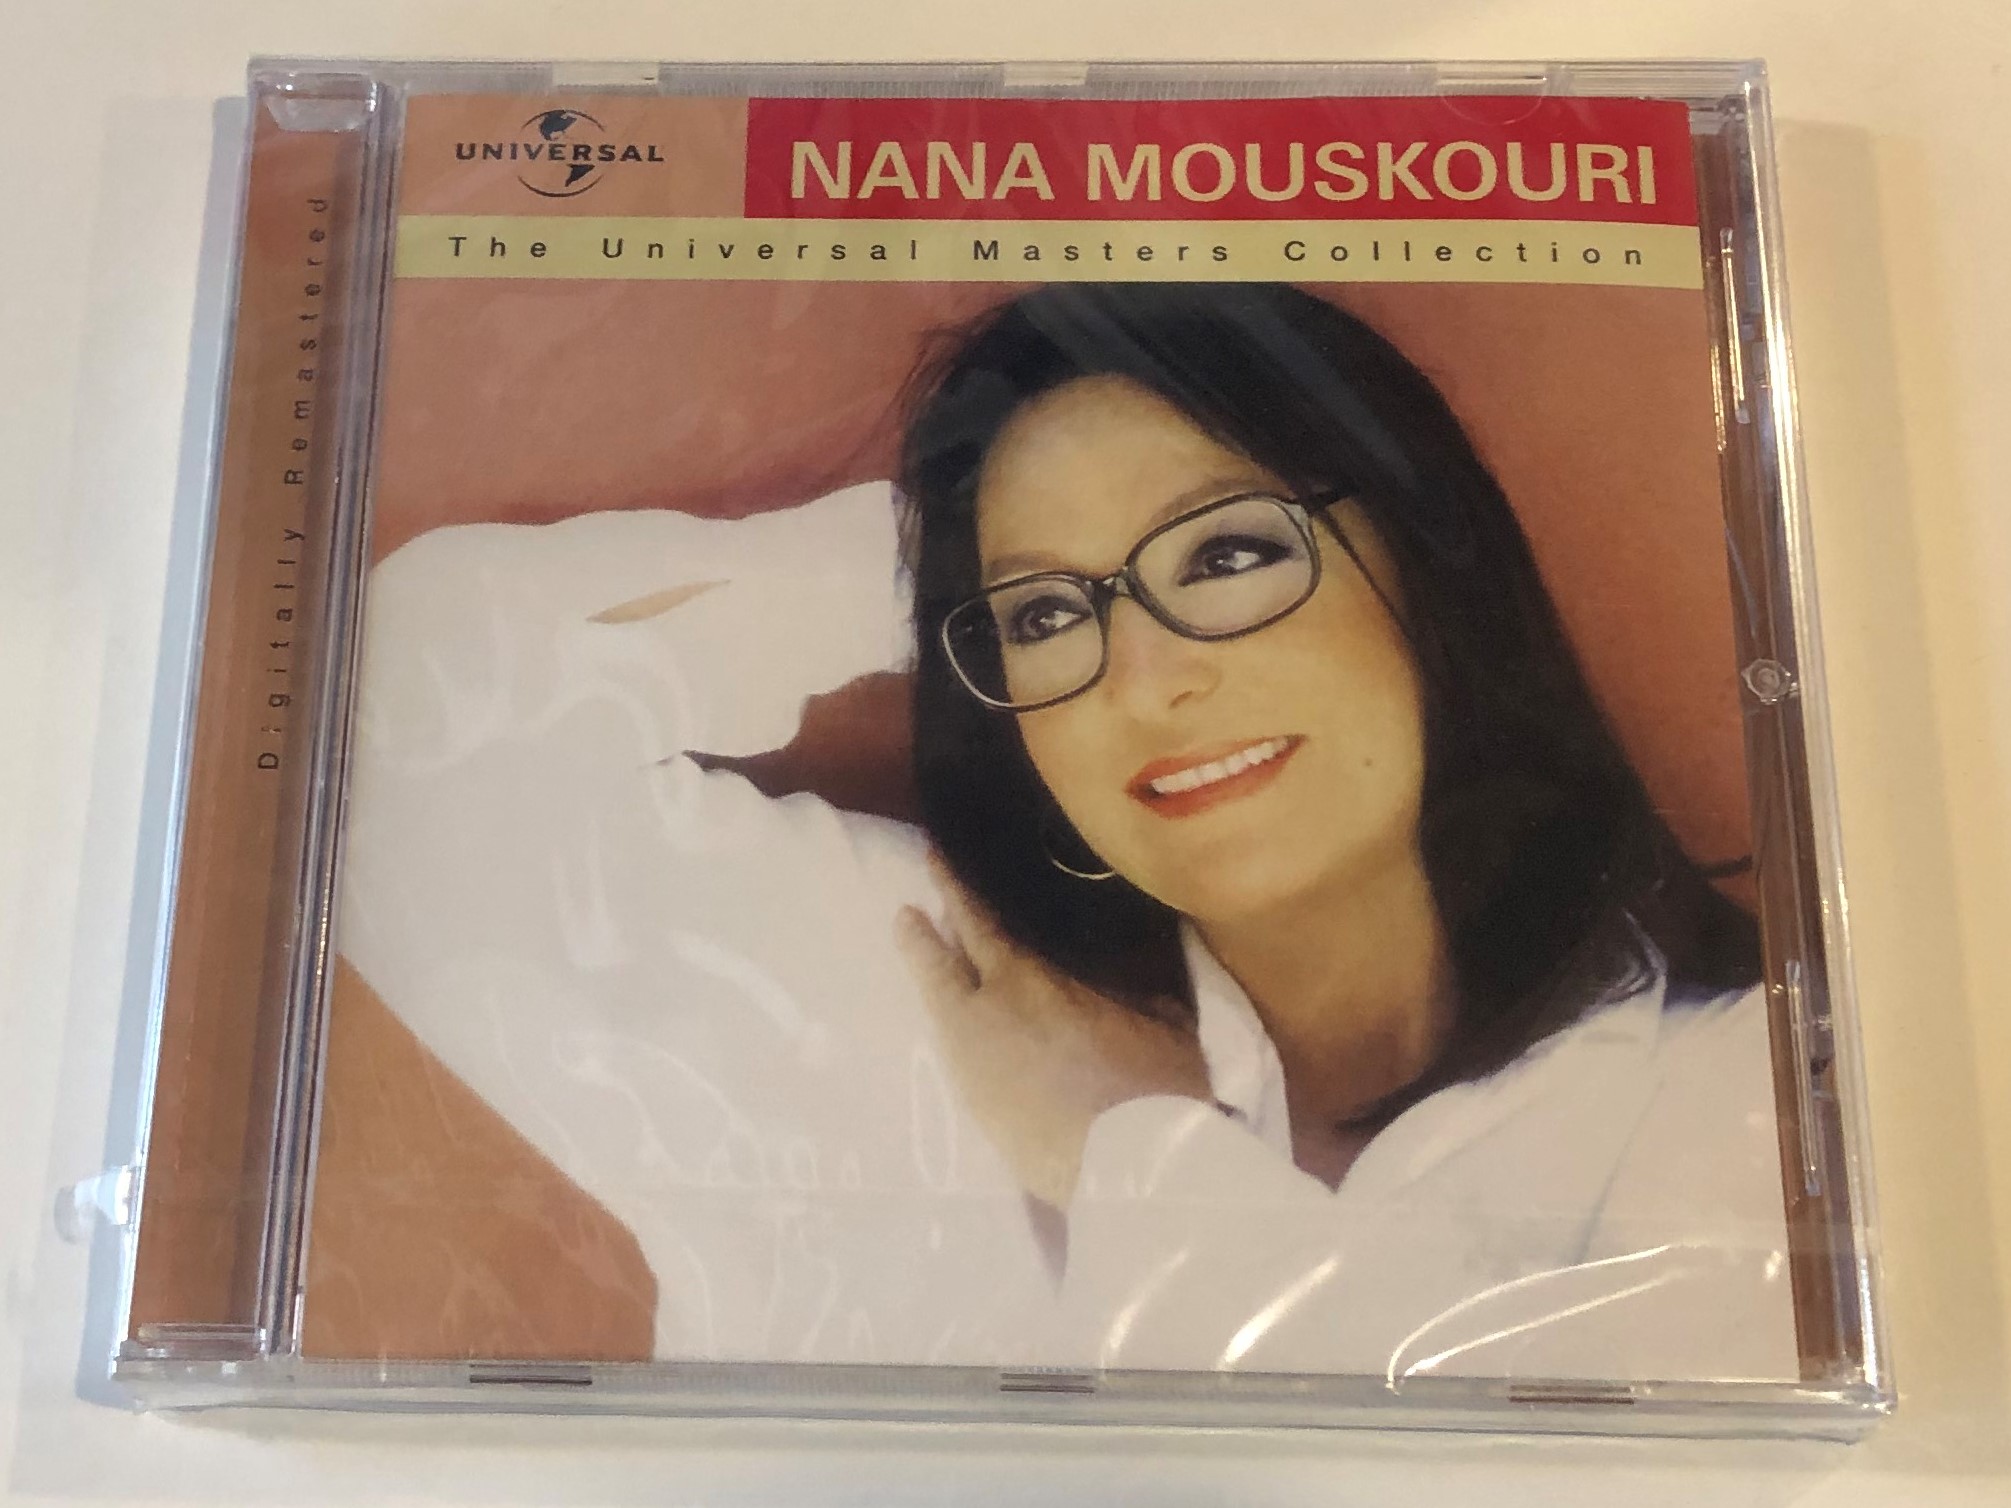 nana-mouskouri-the-universal-masters-collection-digitally-remastered-mercury-audio-cd-1999-546-801-2-1-.jpg